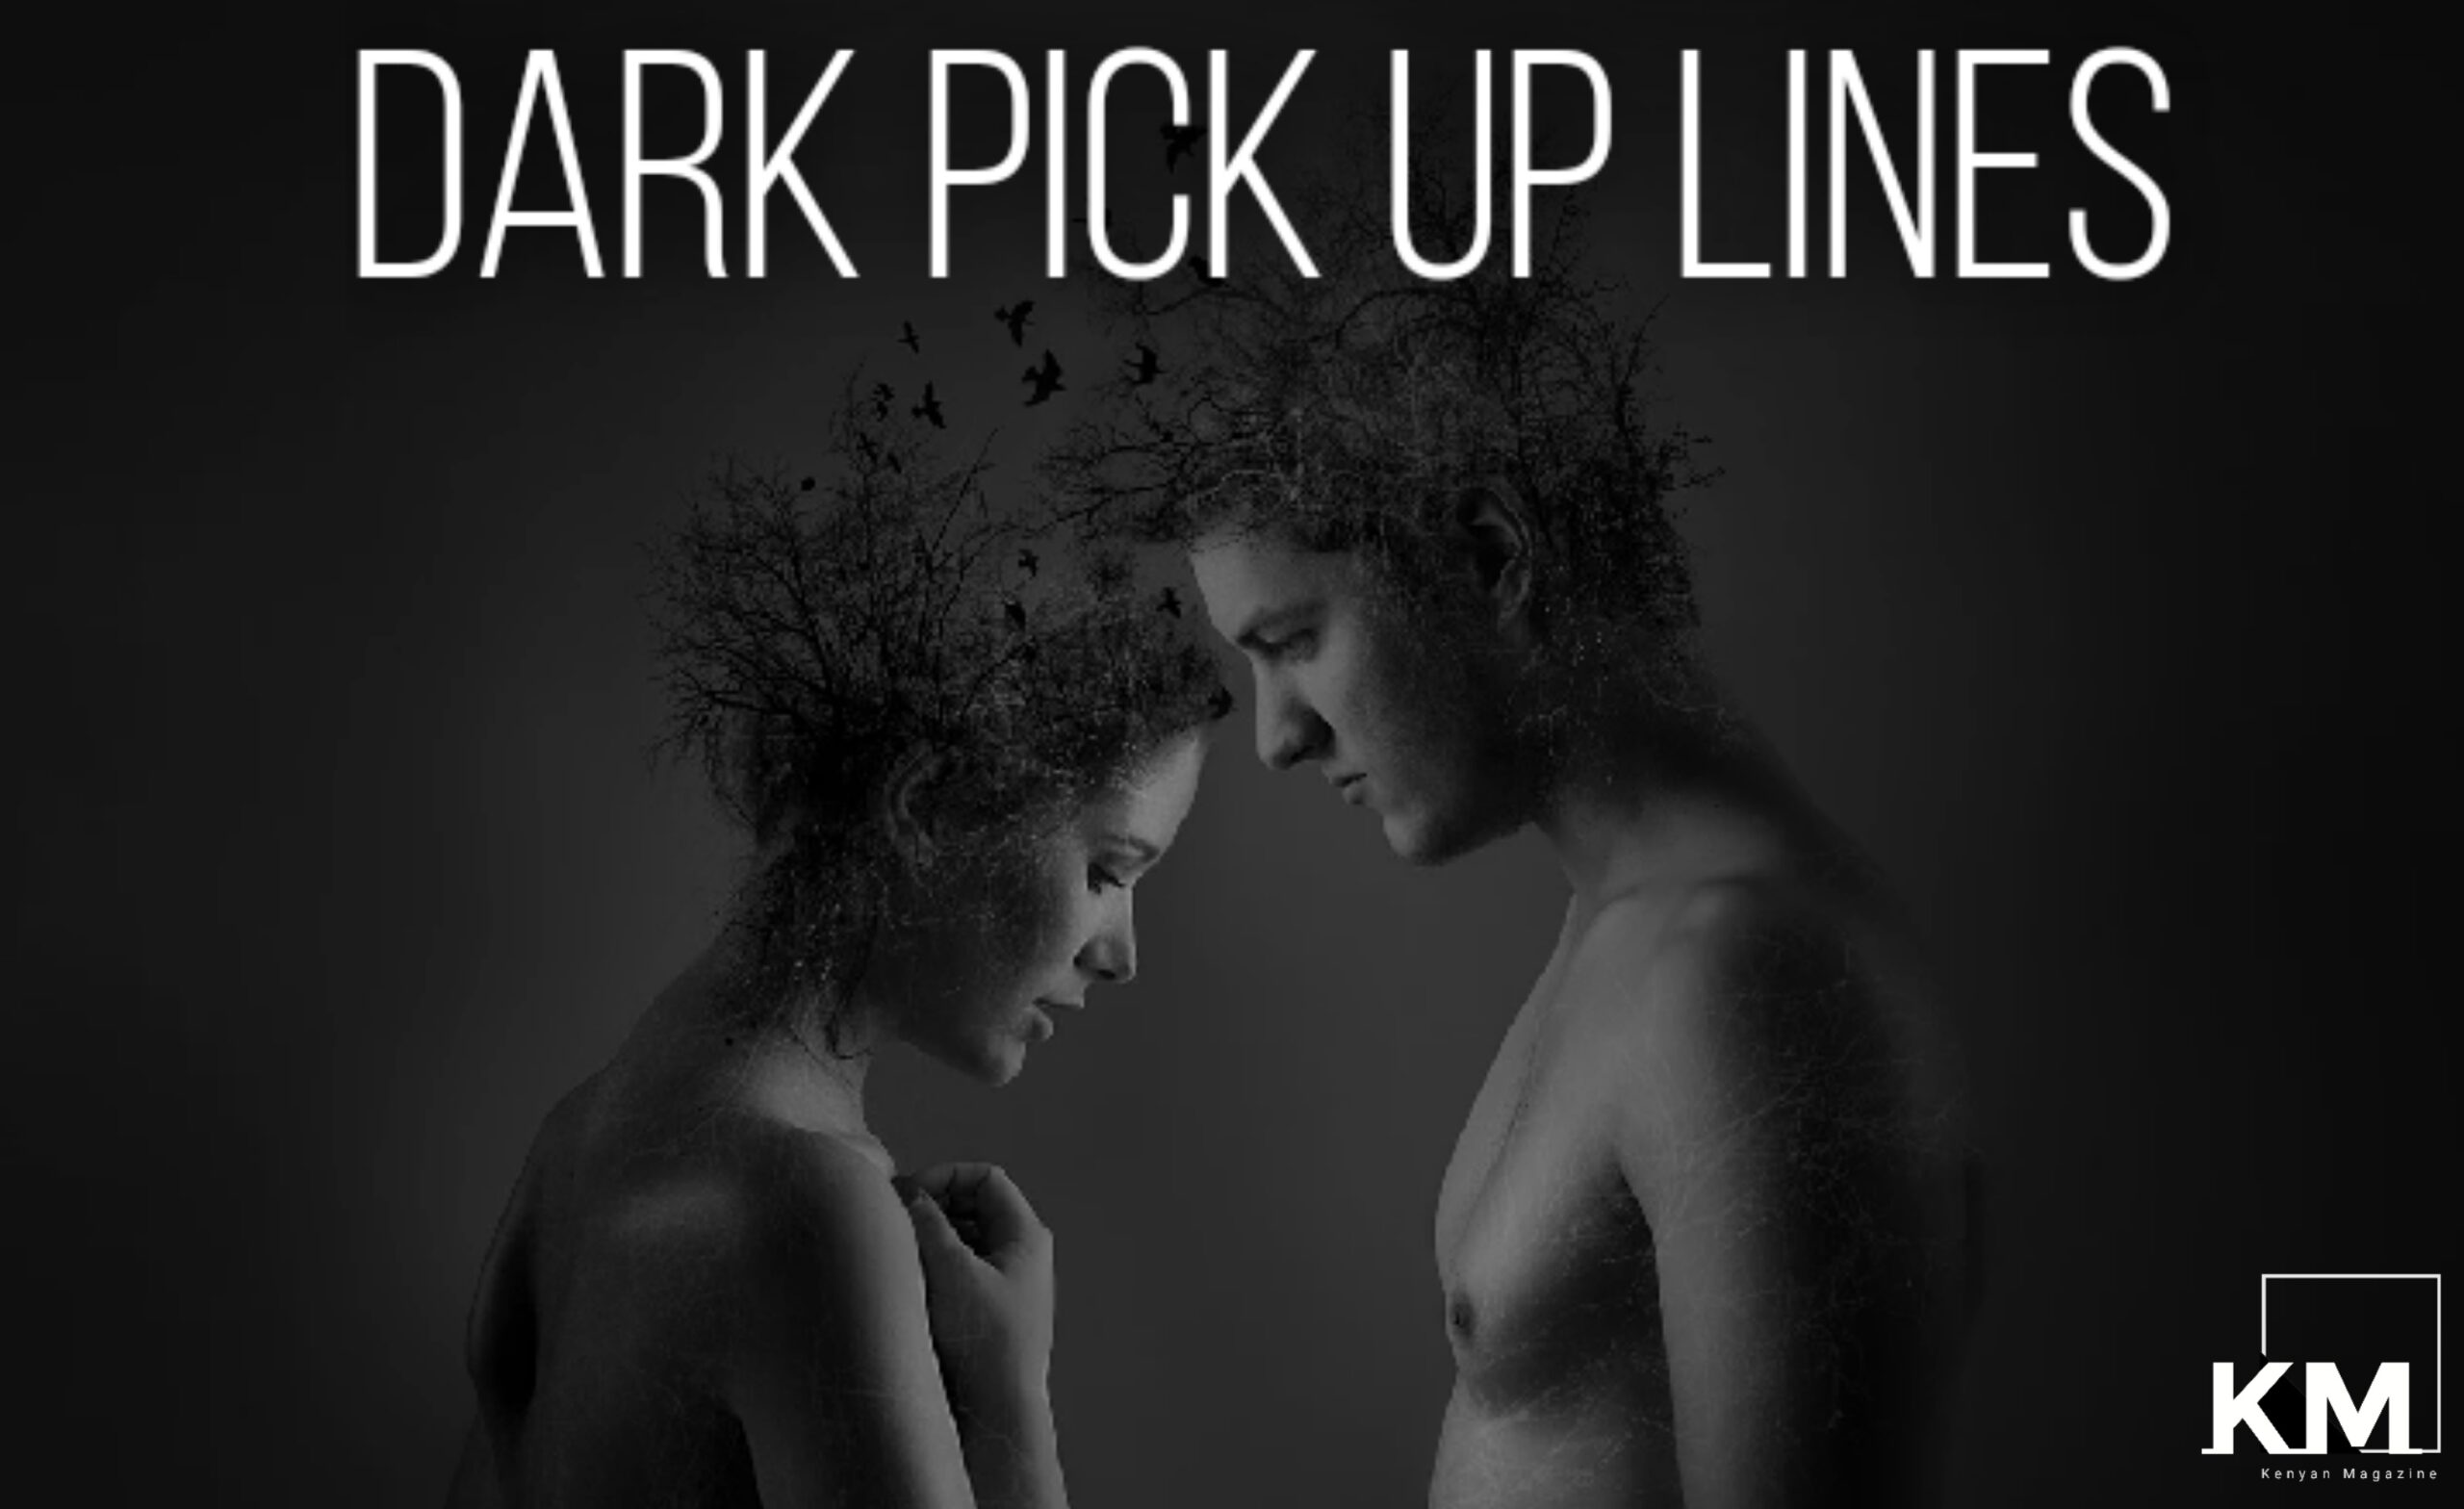 Dark Pick up lines